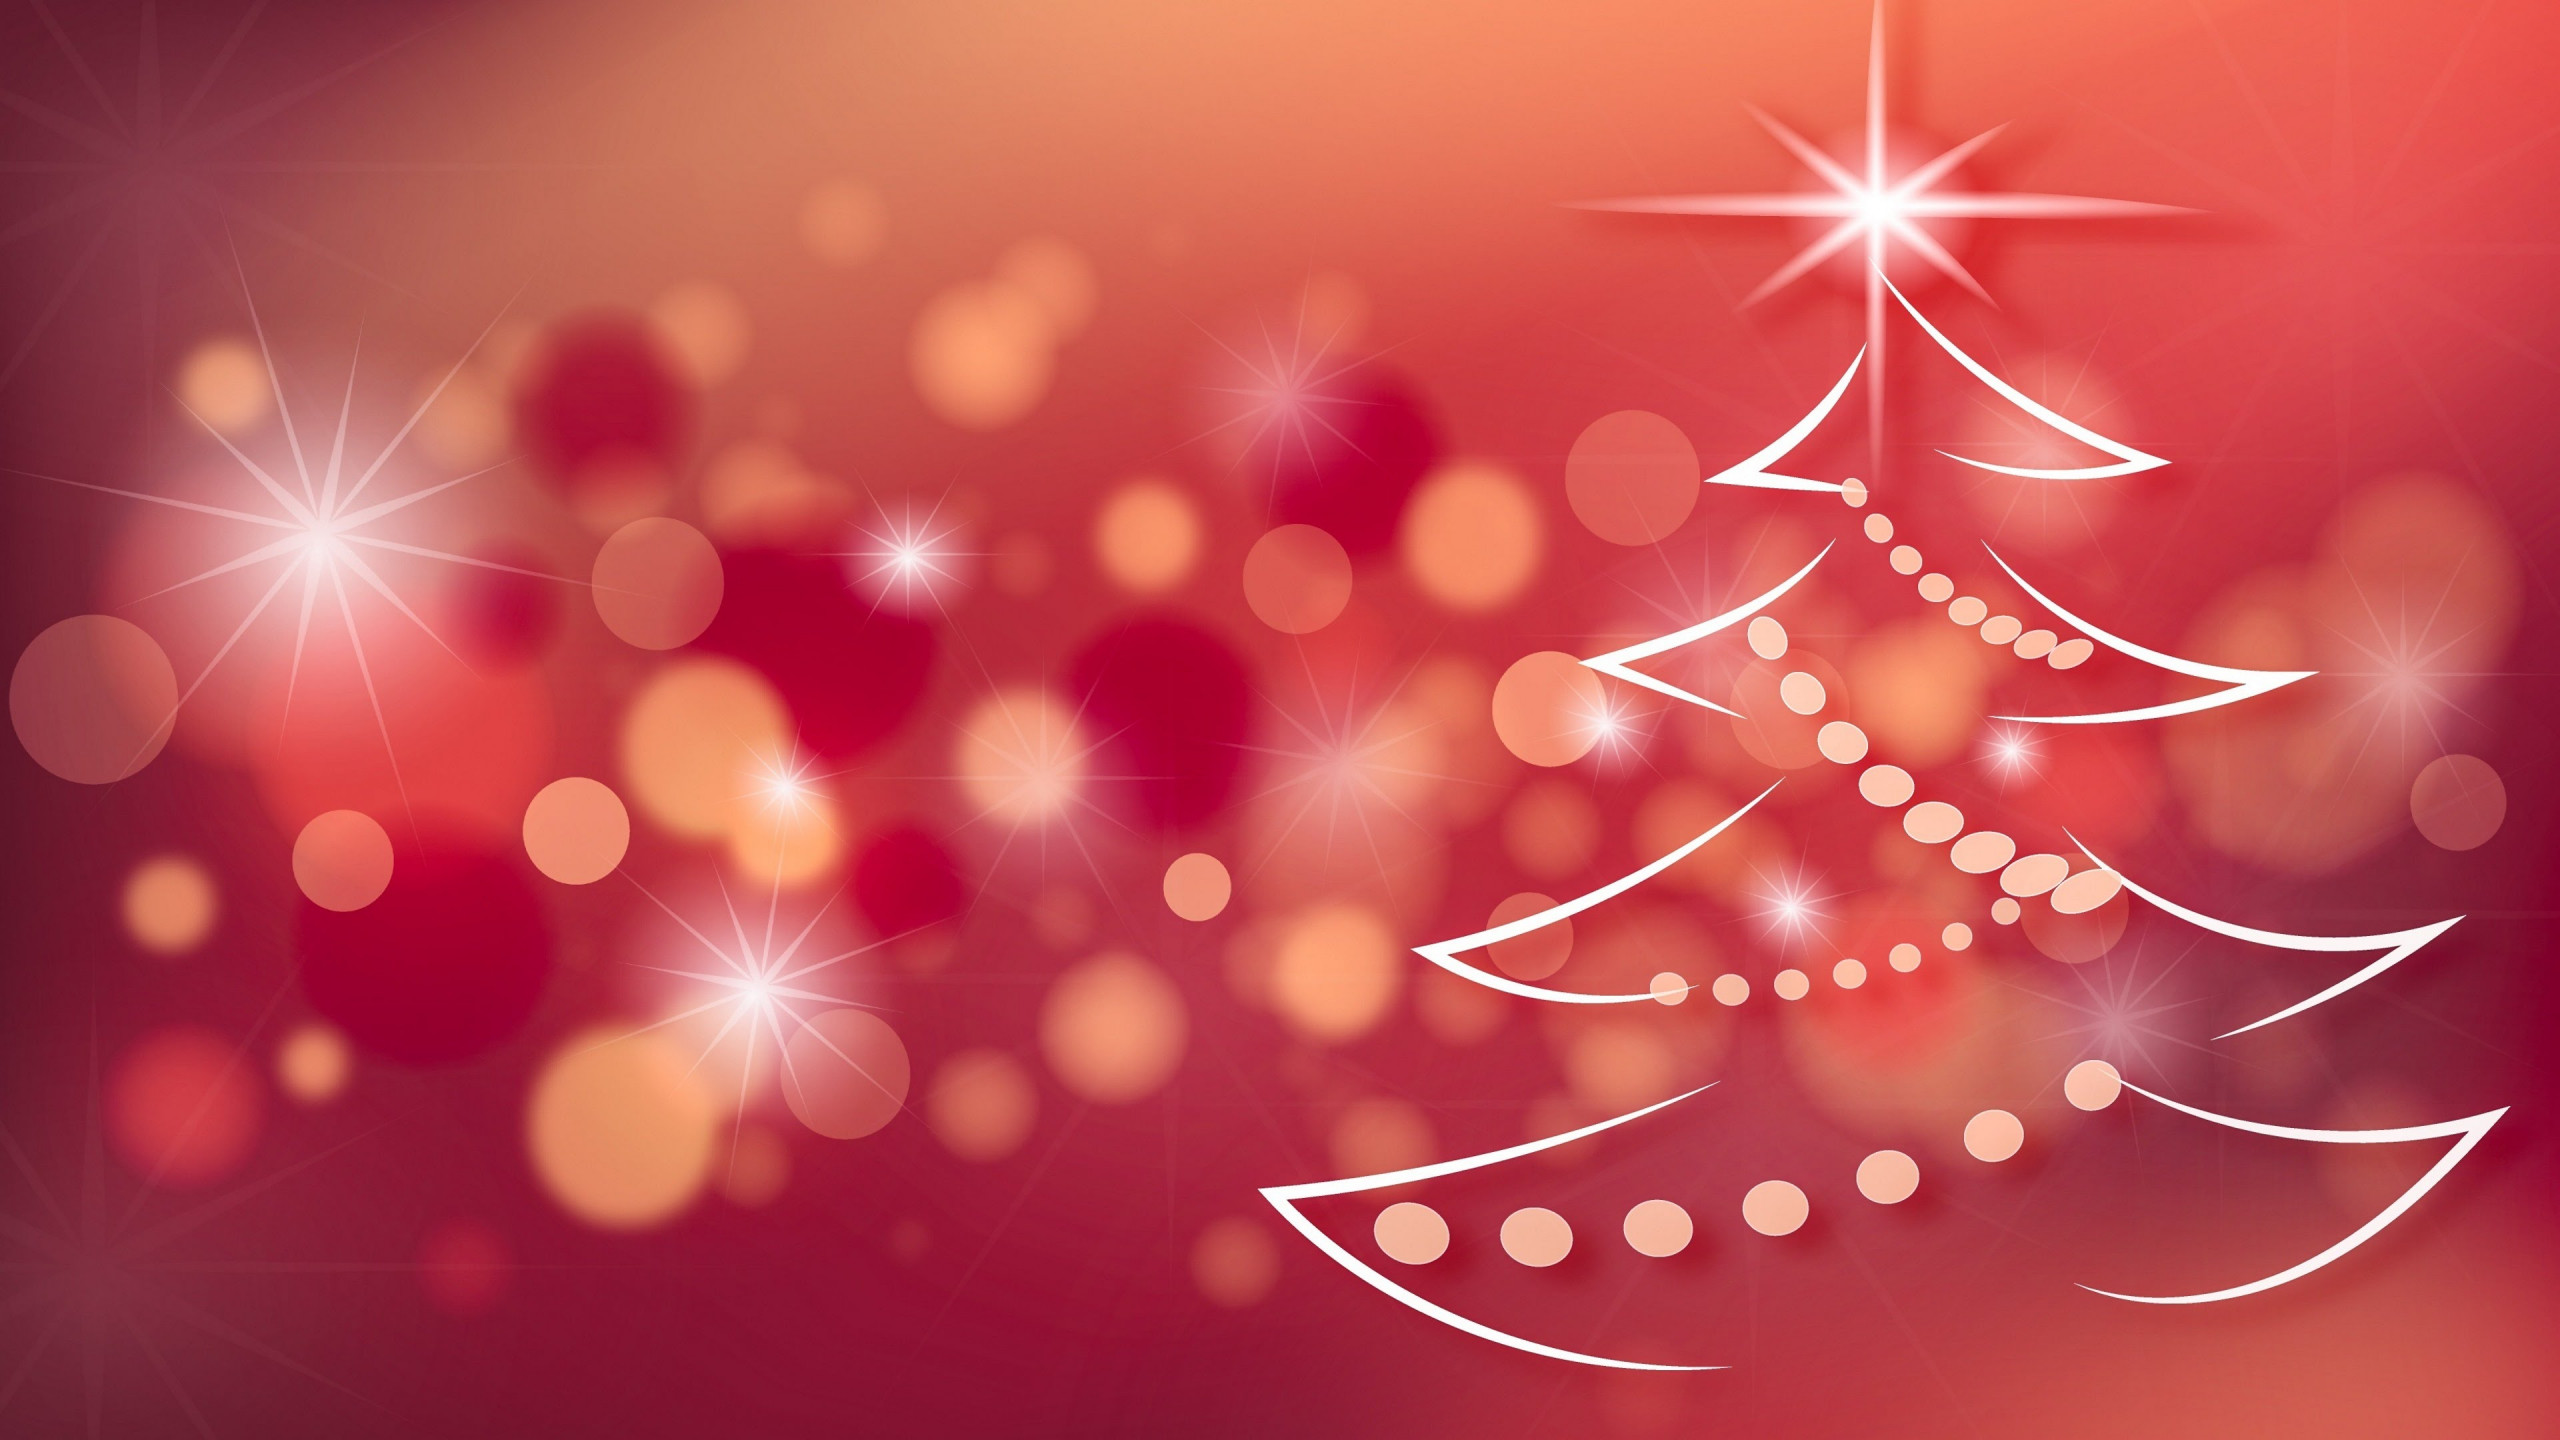 Download wallpaper: Christmas tree 2560x1440